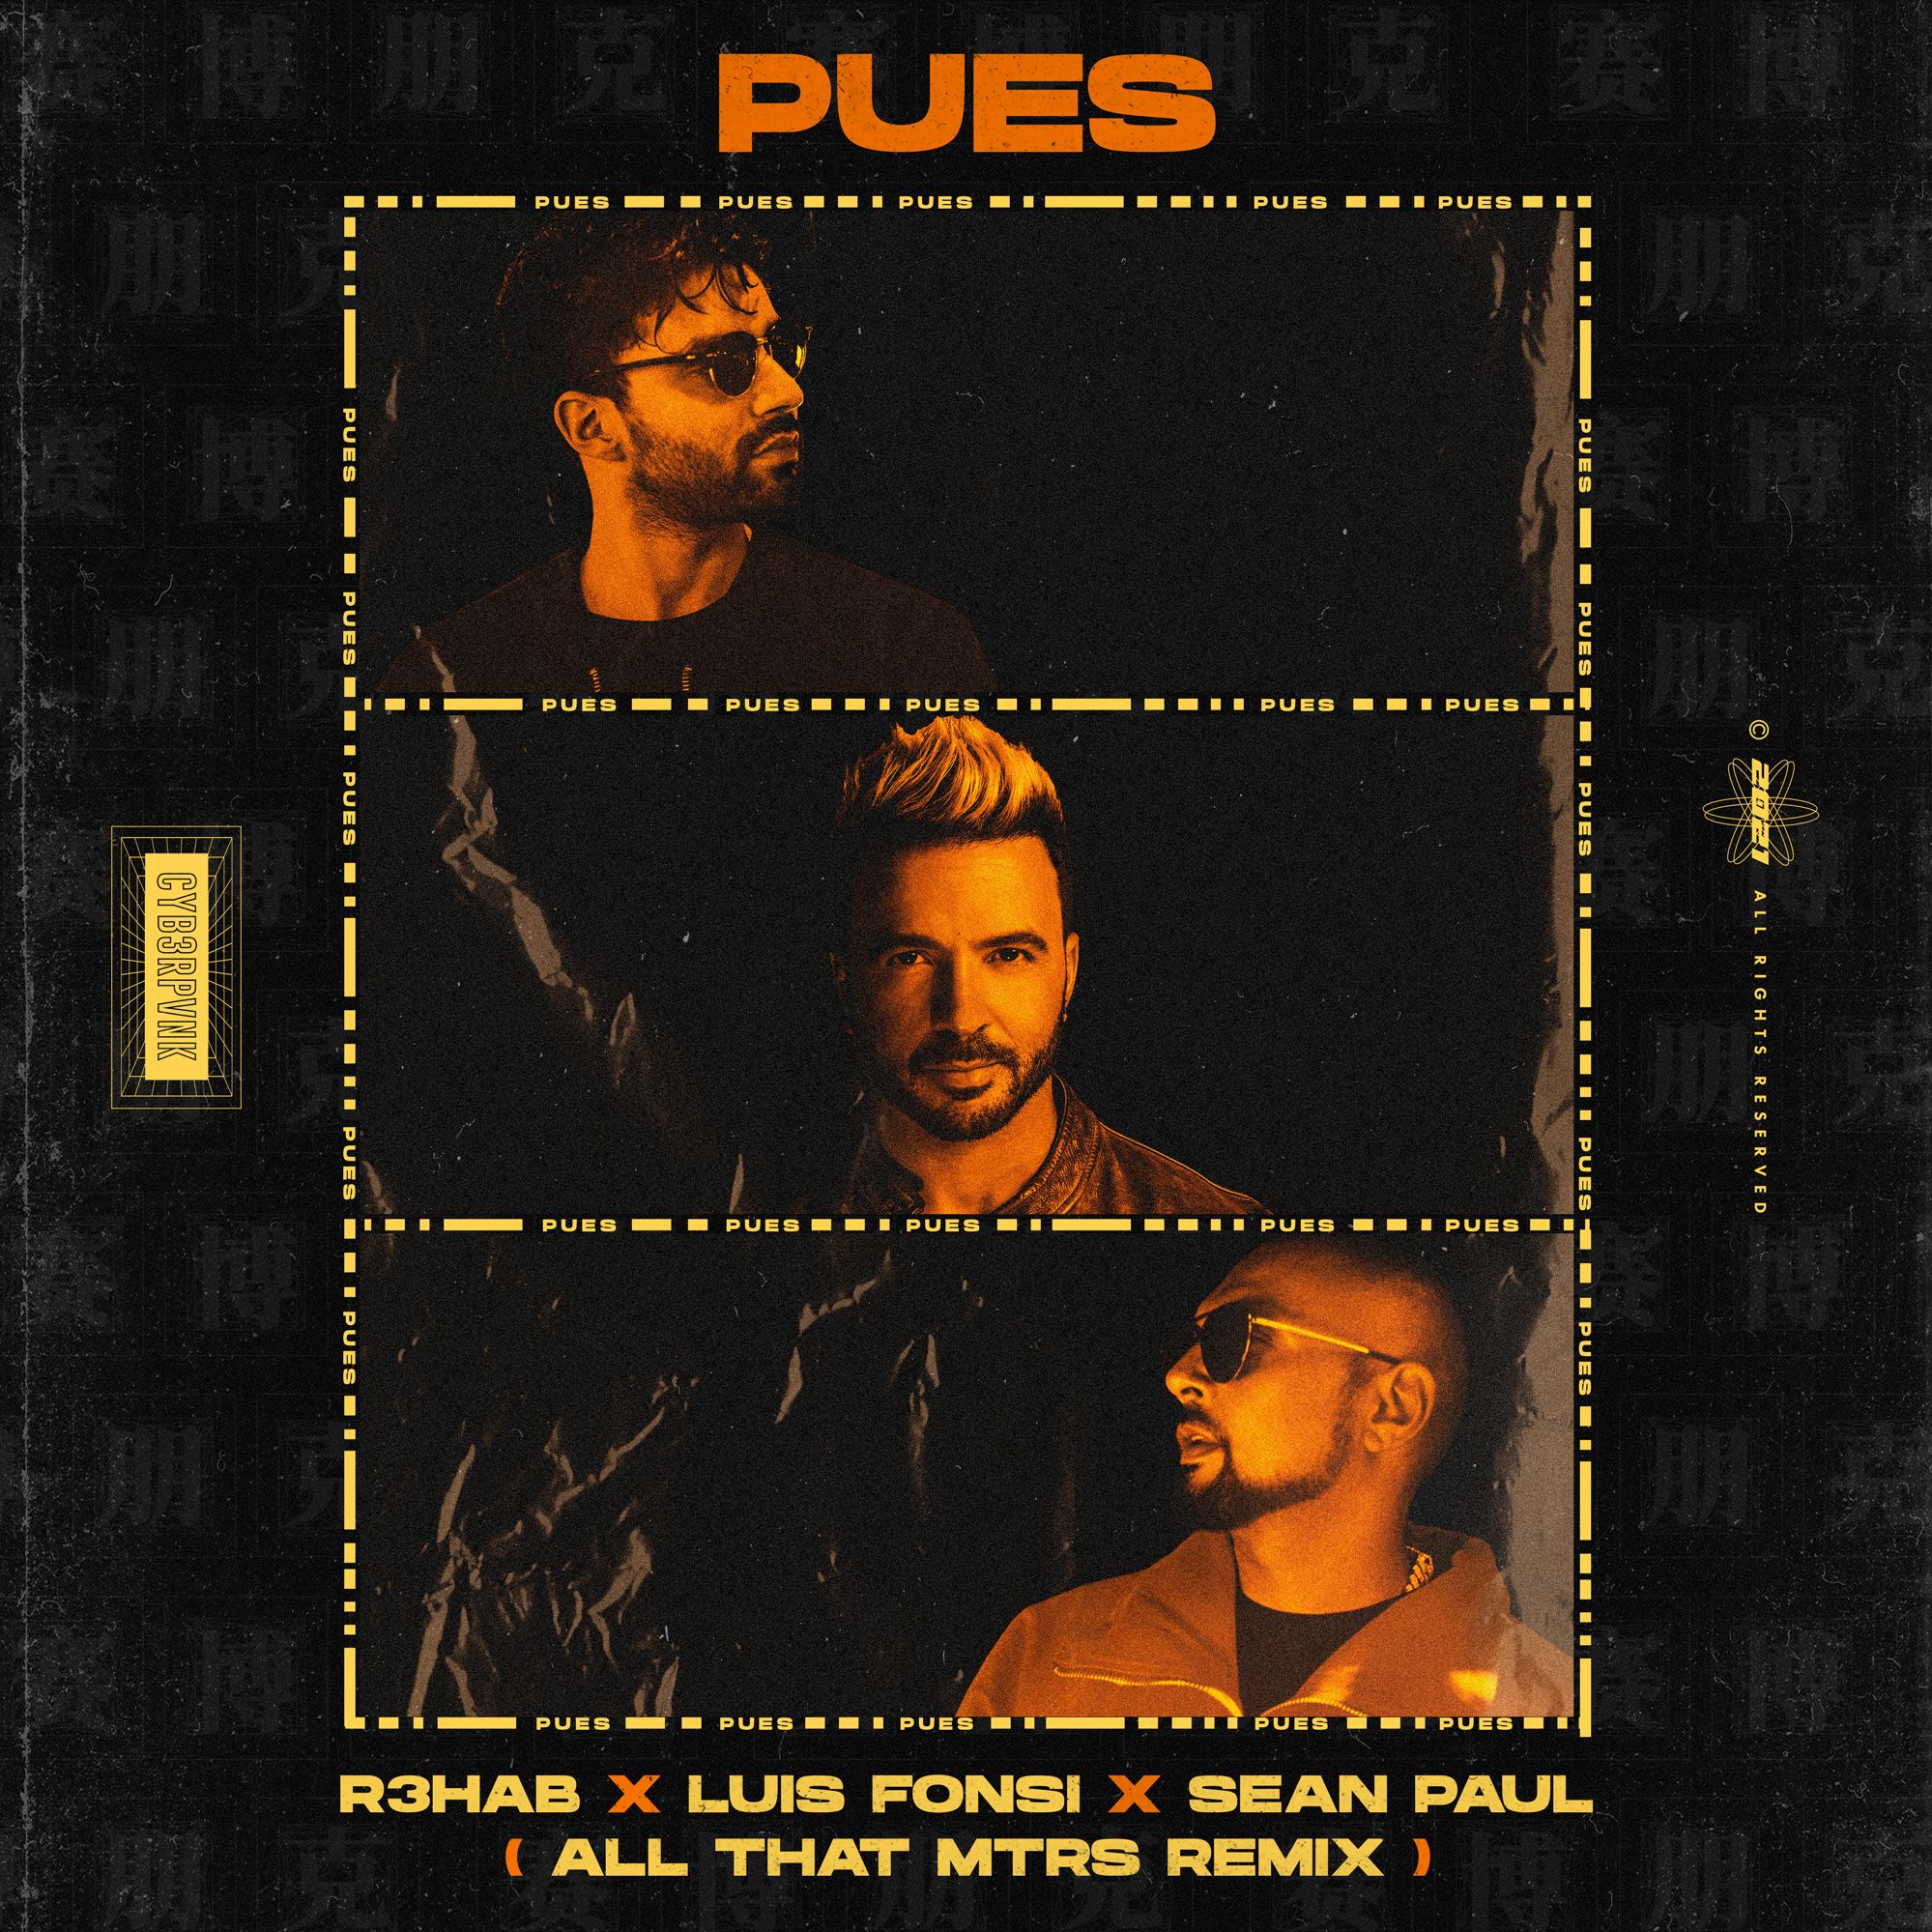 R3HAB x Luis Fonsi x Sean Paul - Pues (All That MTRS Remix)